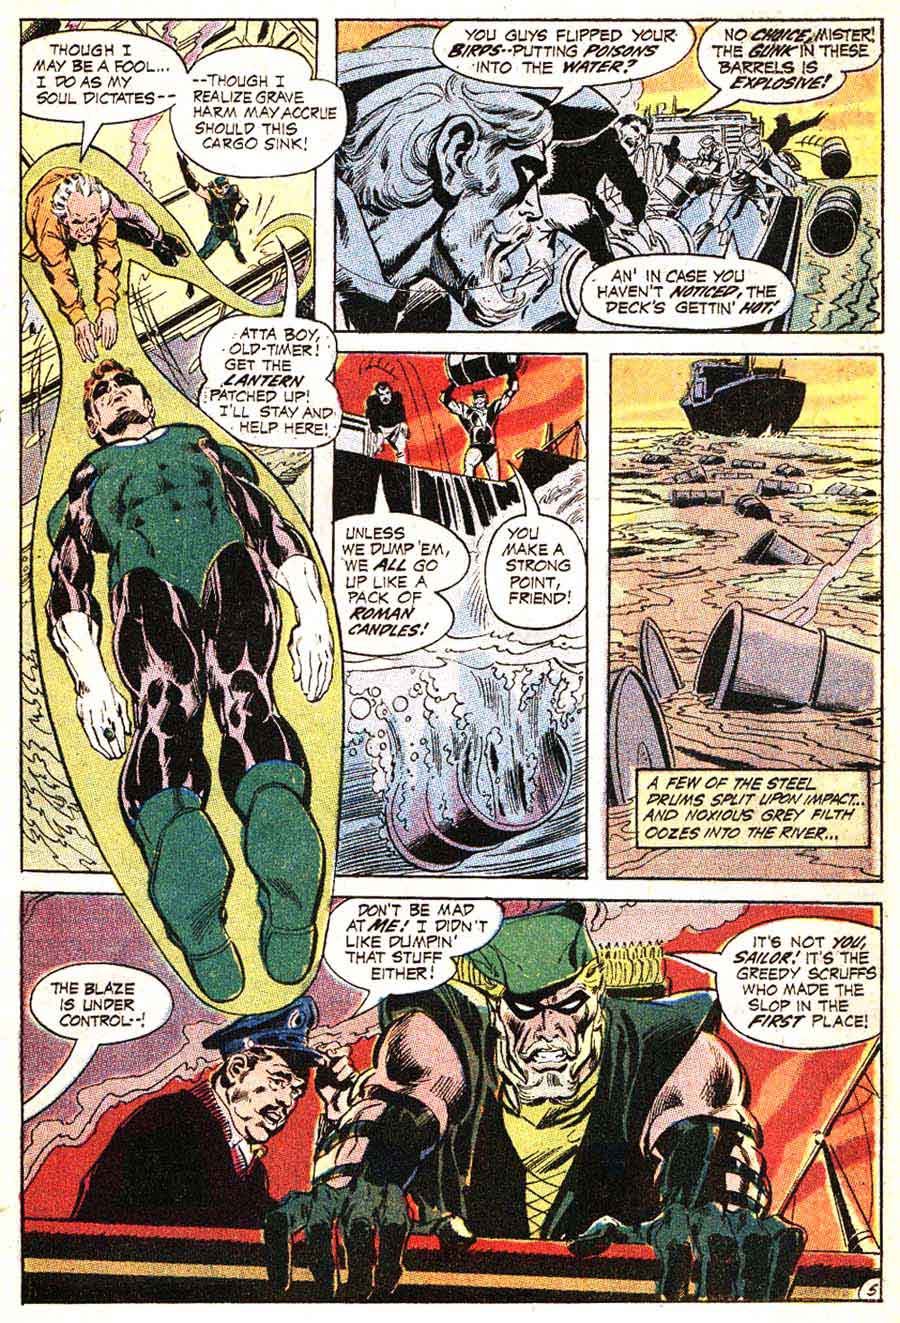 Green Lantern Green Arrow #80 bronze age 1970s dc comic book page art by Neal Adams